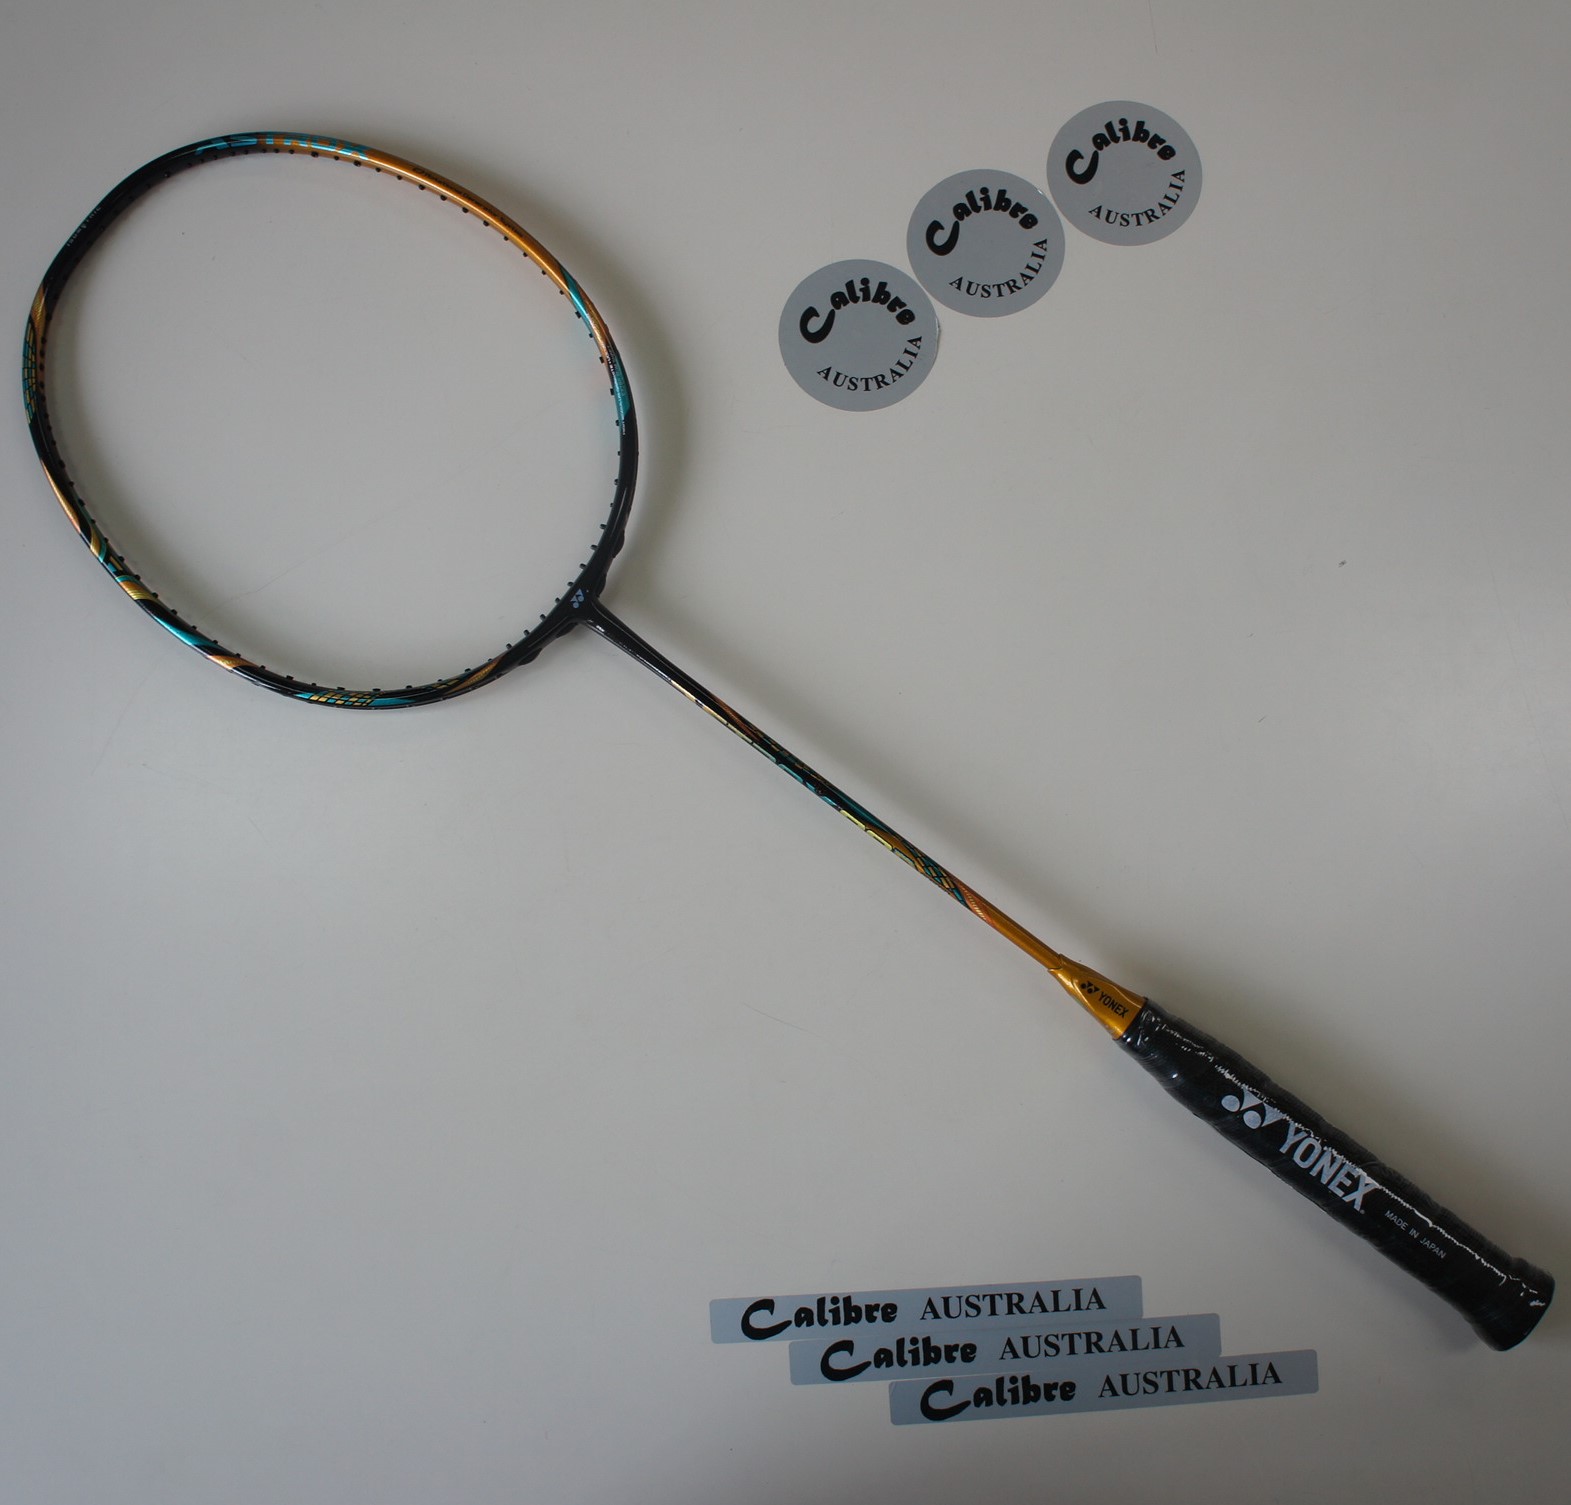 2021 YONEX Astrox 88D Pro Badminton Racquet 4UG5, AX88D Pro, Unstrung